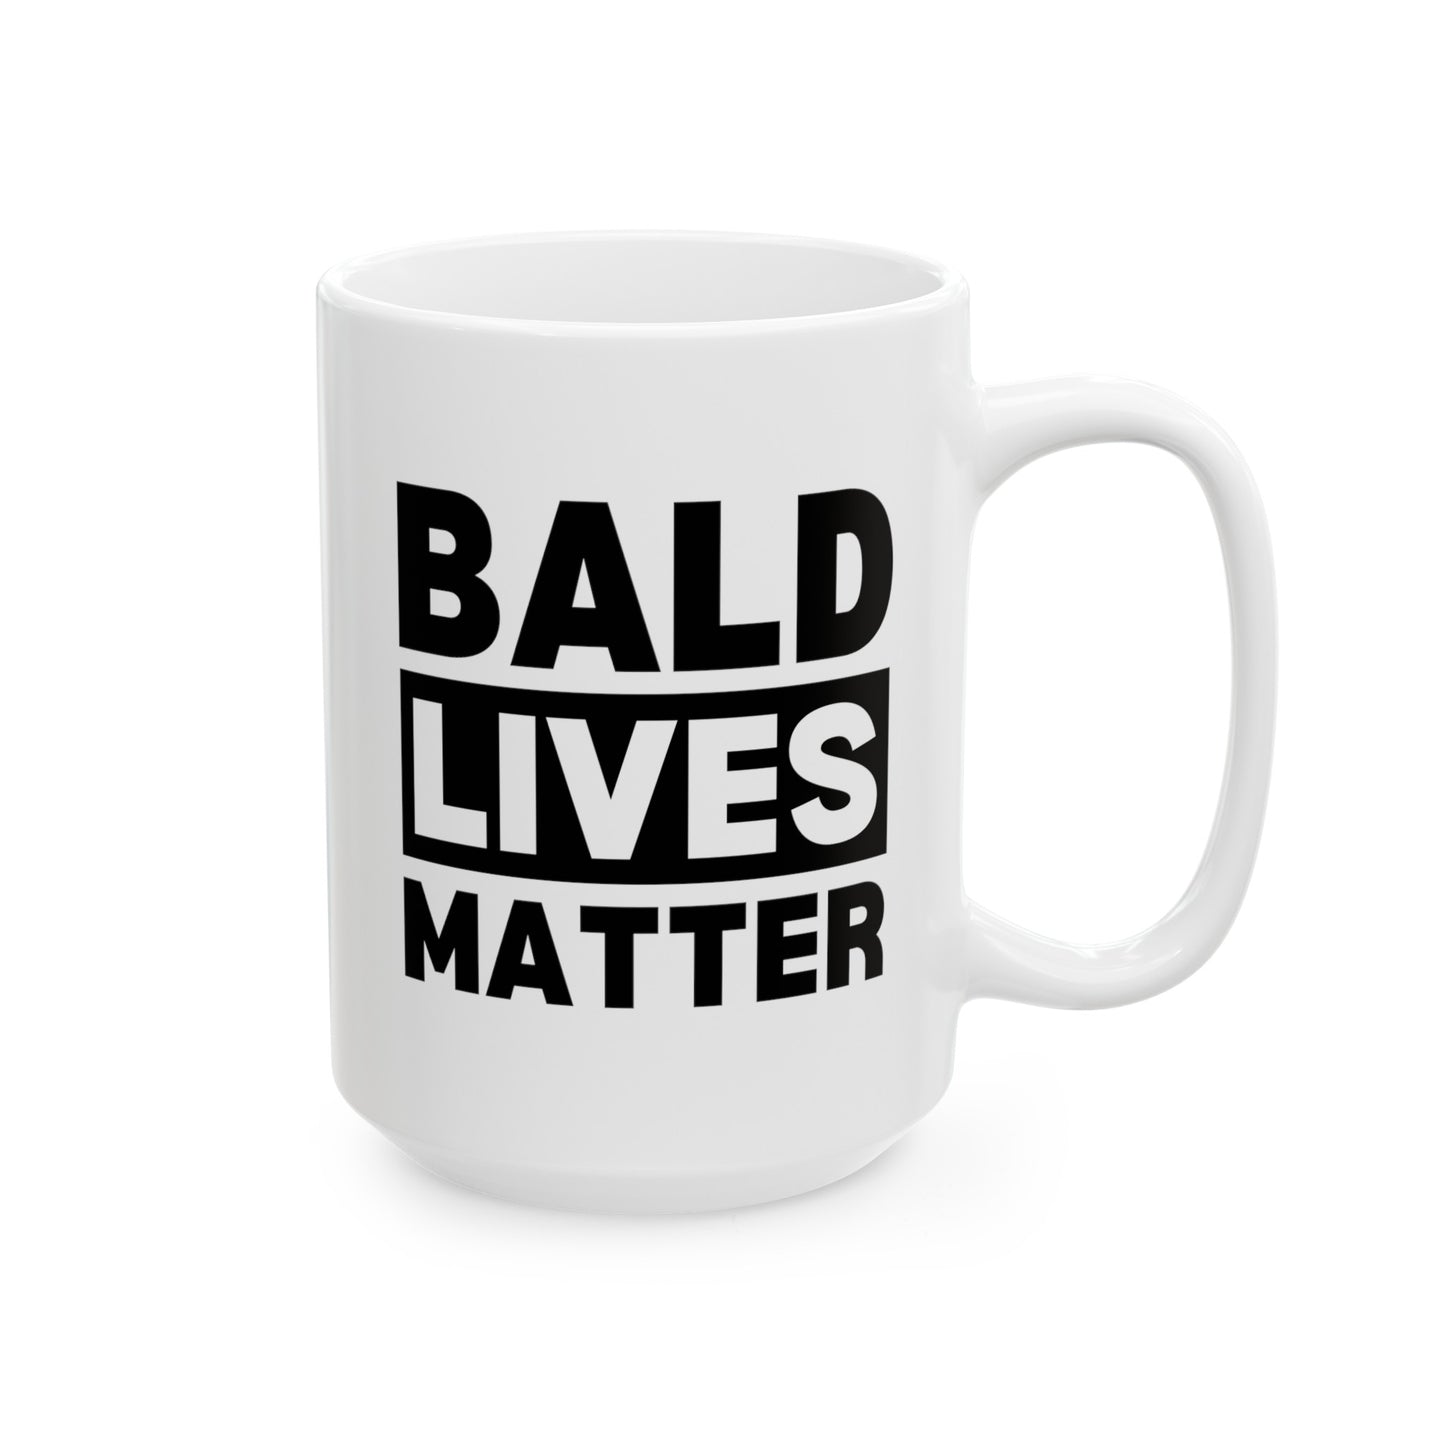 Bald Lives Matter 15oz white funny large coffee mug gift for middle aged men him baldi baldy birthday anniversary waveywares wavey wares wavywares wavy wares